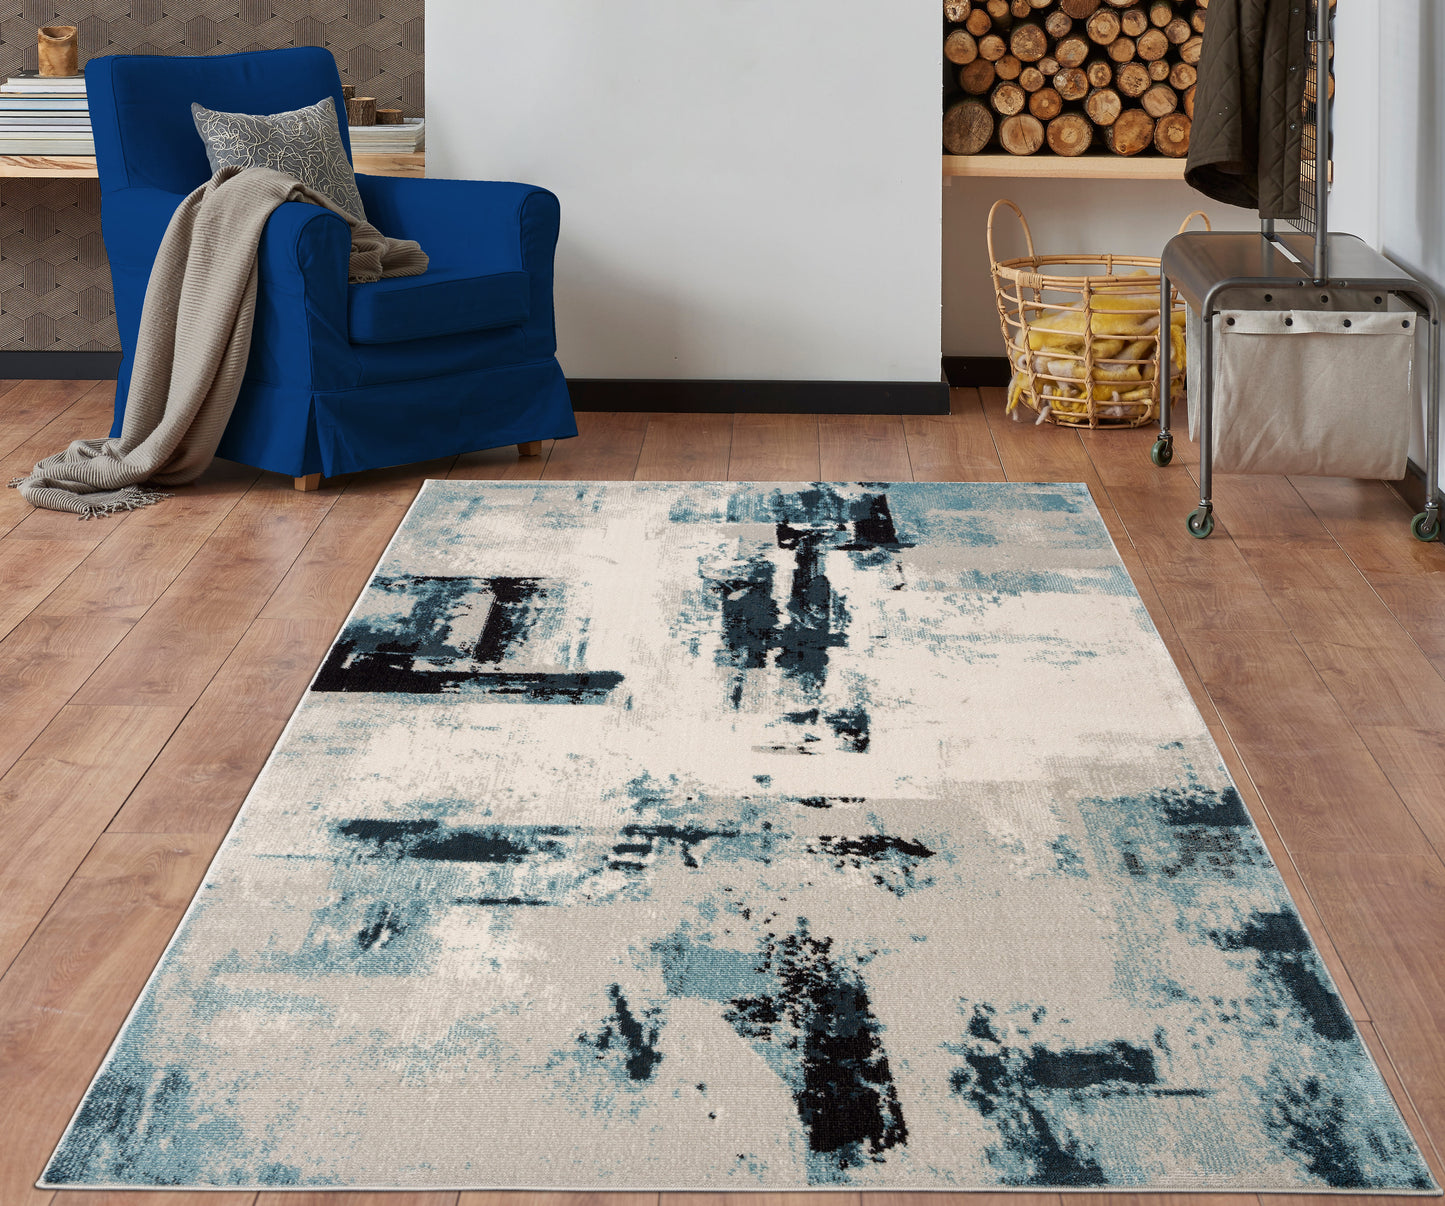 la dole rugs light dark blue beige rustic pattern abstract modern minimalistic area rug 8x10, 8x11 ft Large Living Room Carpet, Bedroom, Kitchen